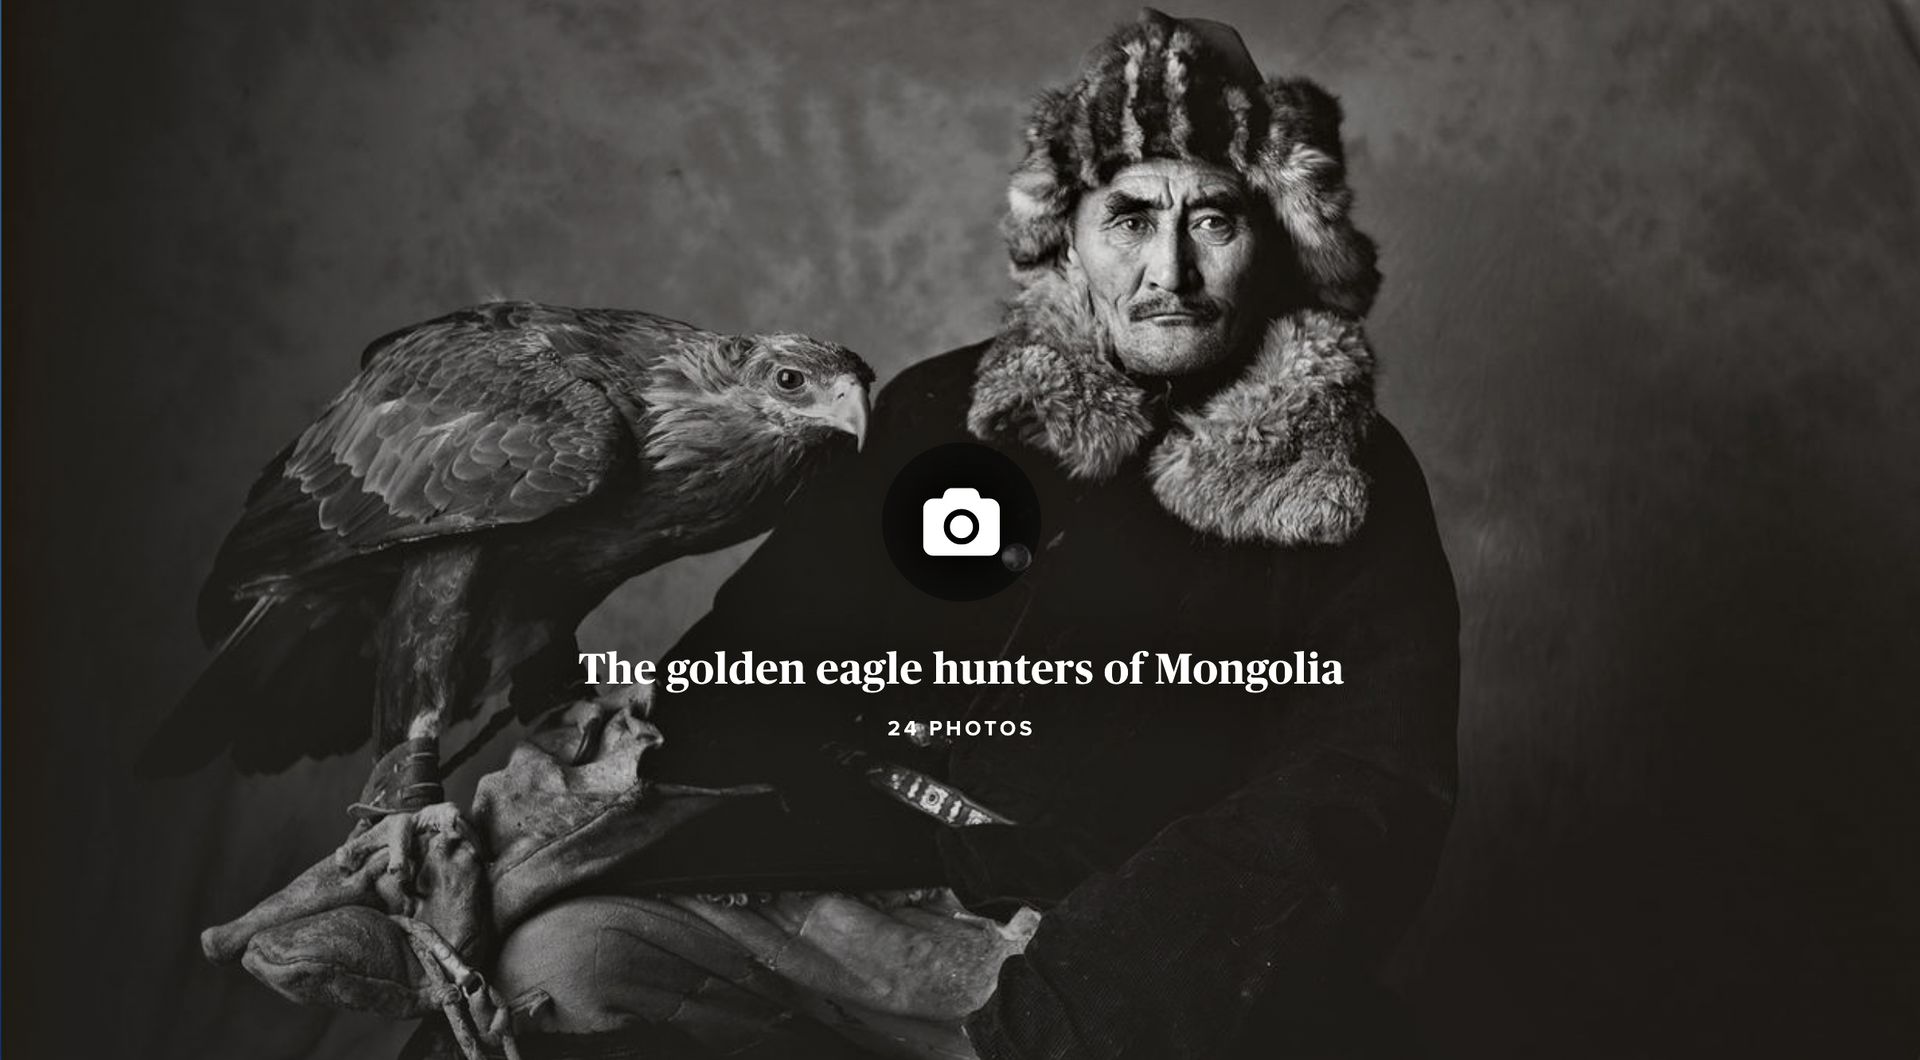 The golden eagle hunters of Mongolia
